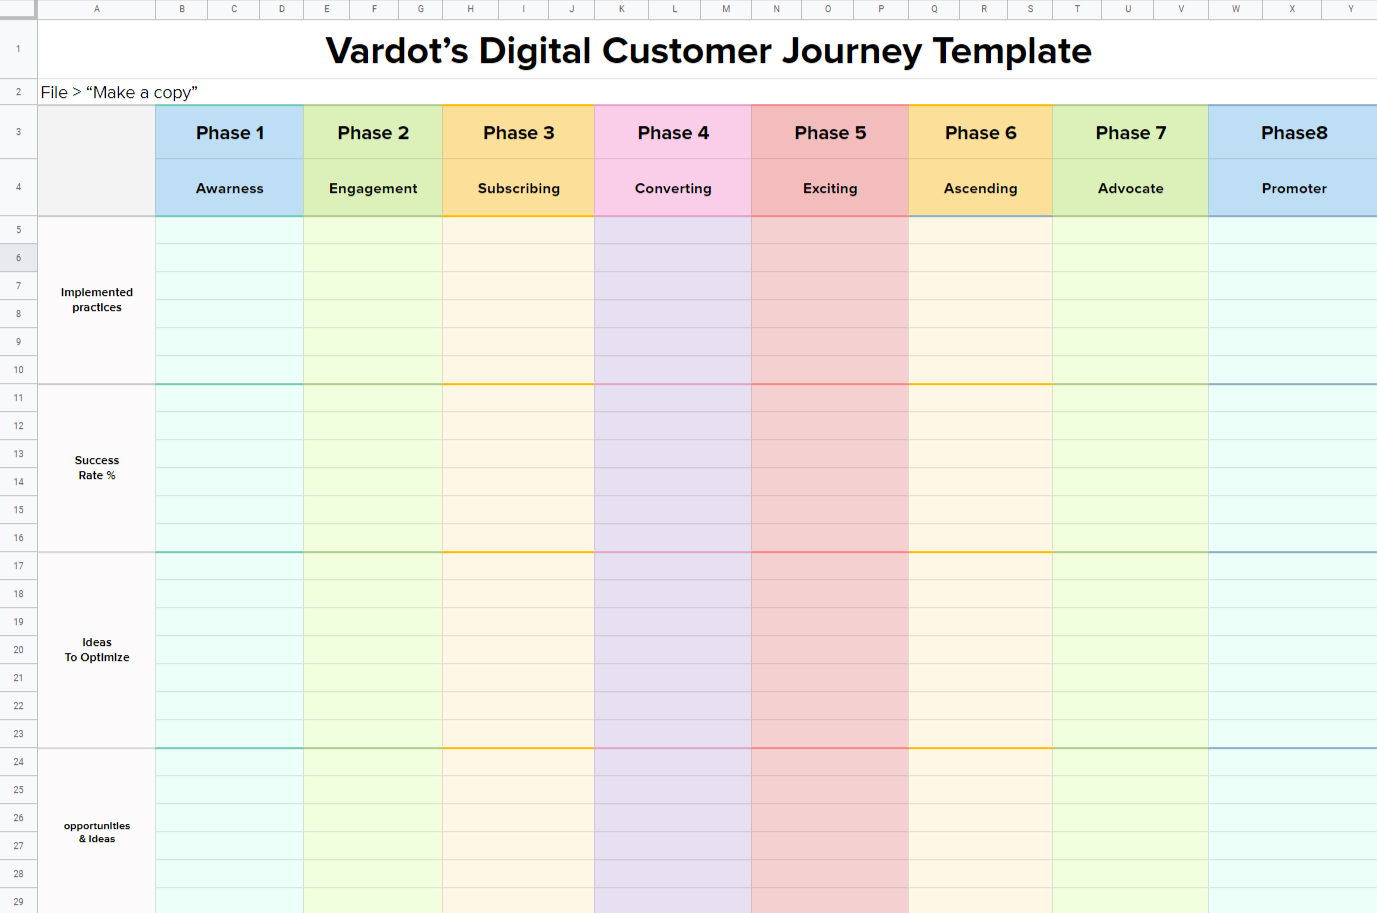 Vardot’s Digital Customer Journey Template